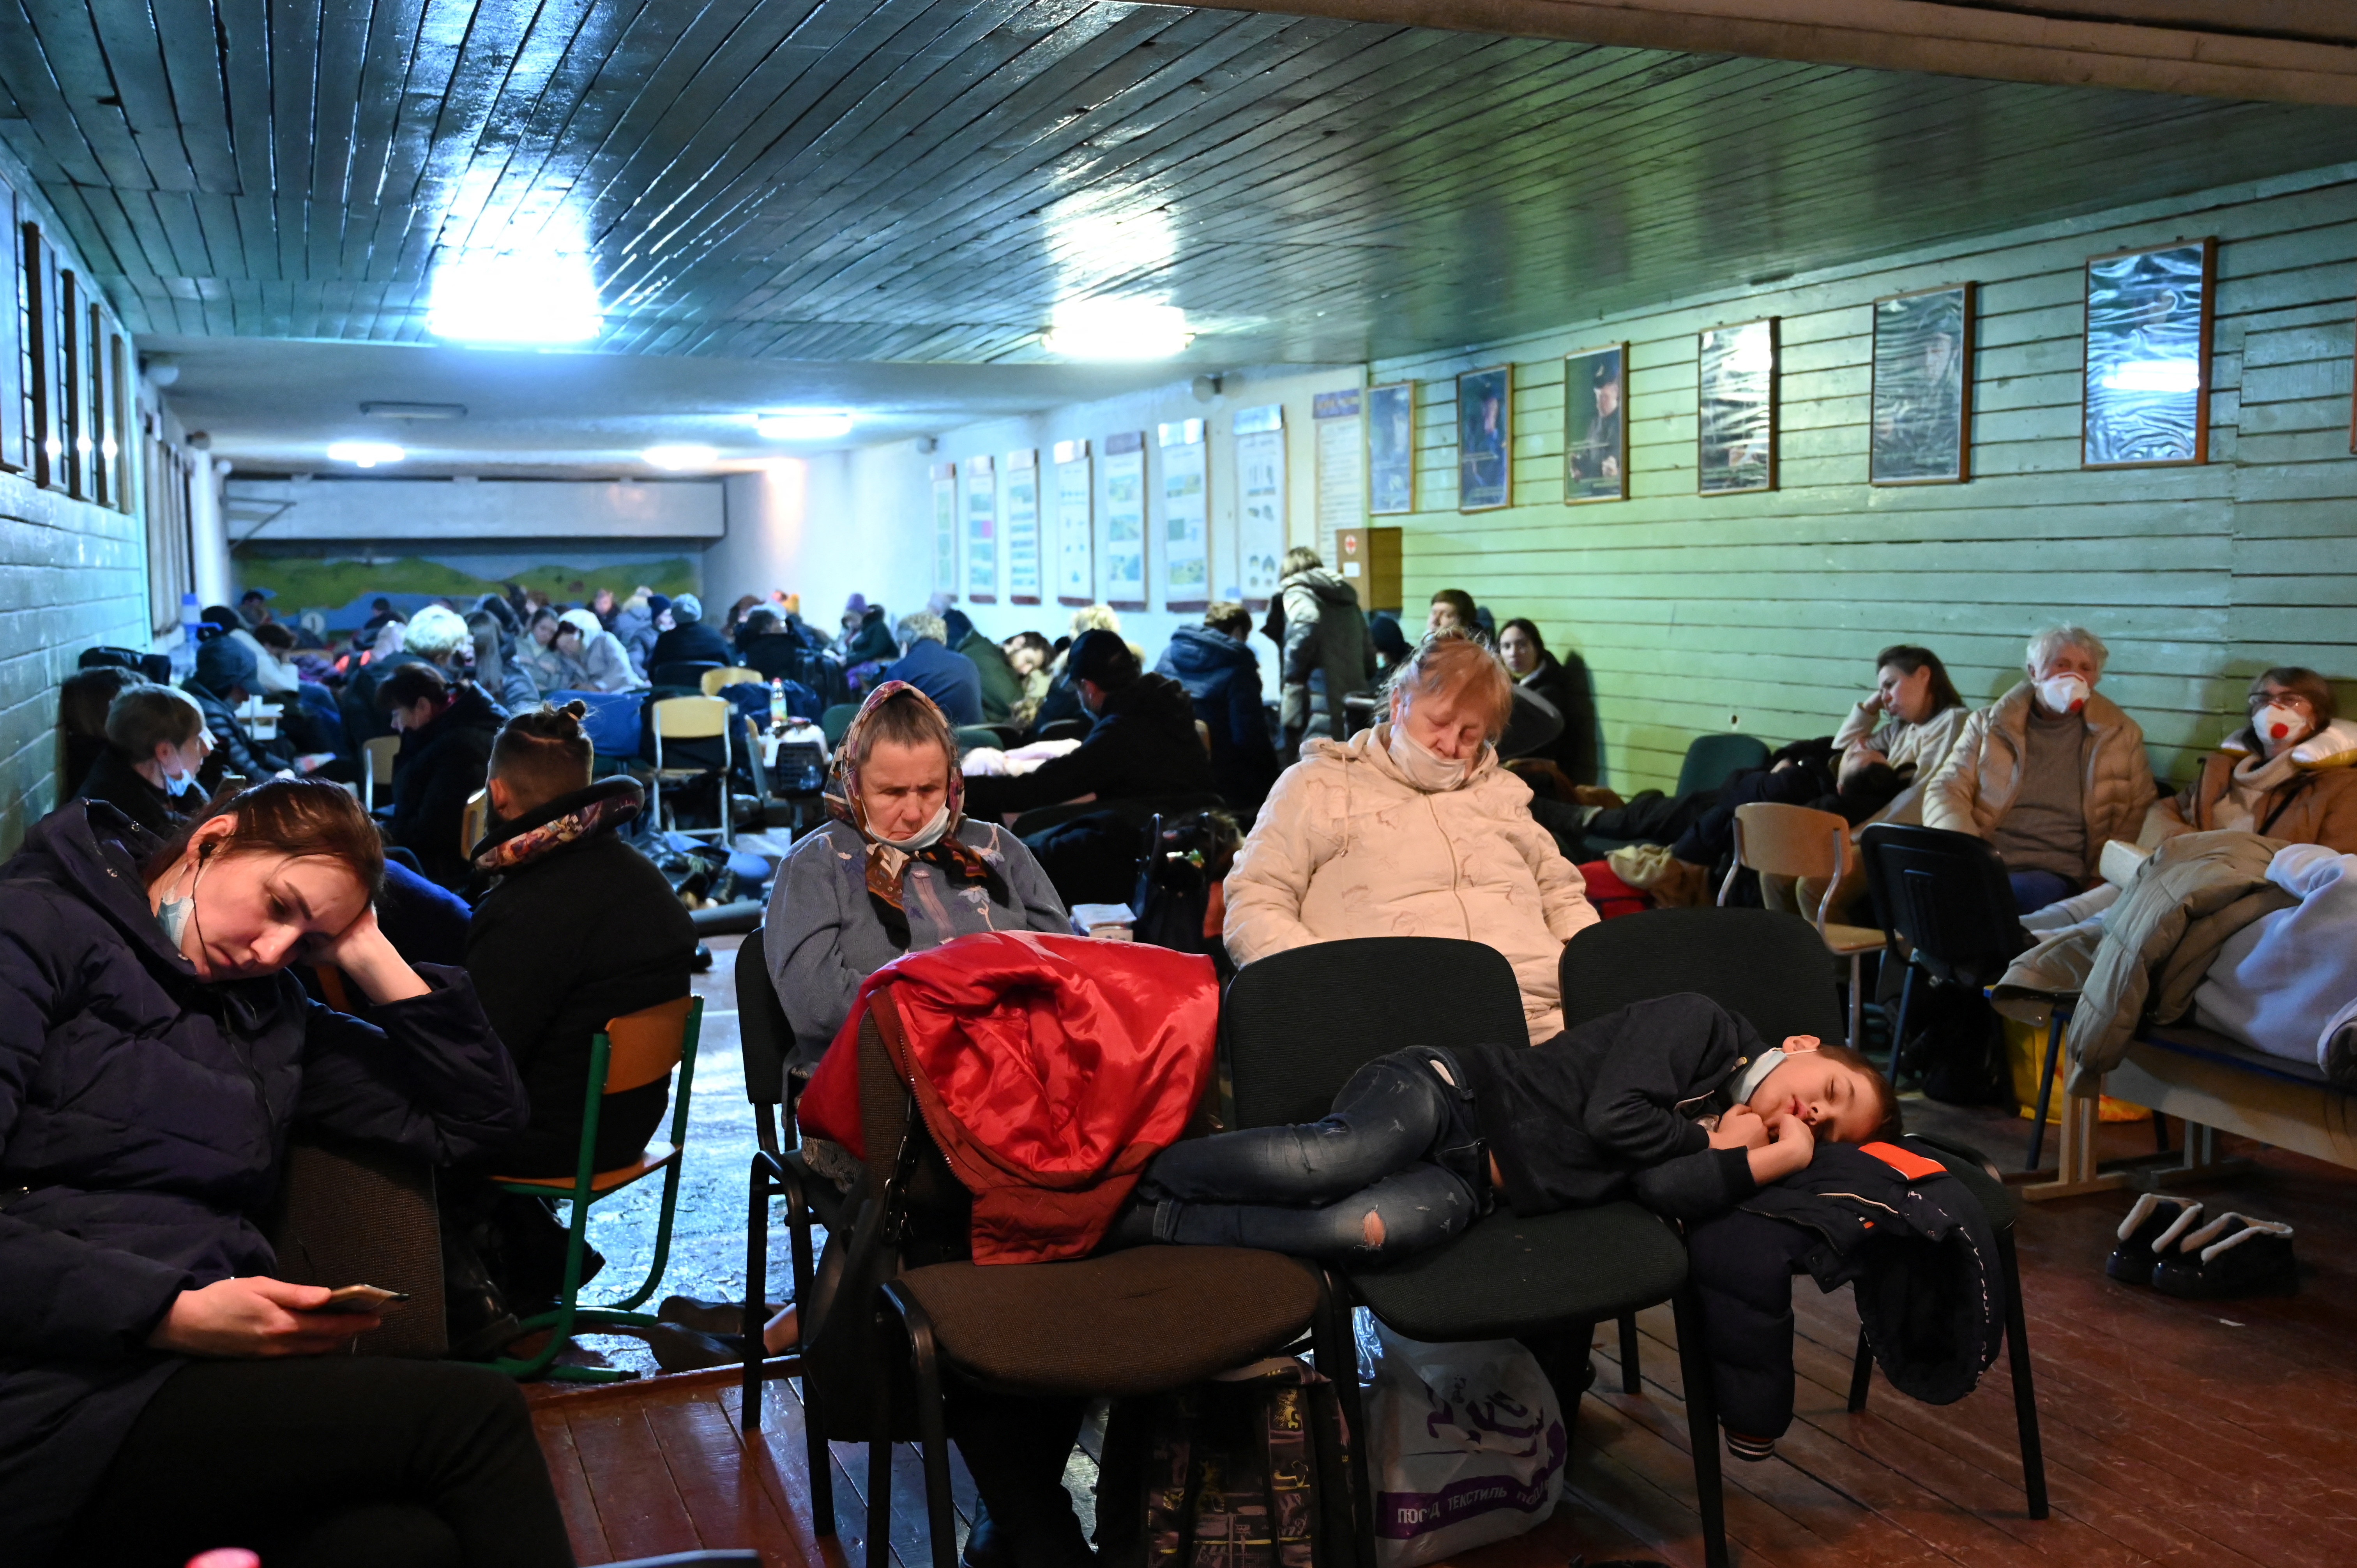 People gather in an air raid shelter in Kyiv, Ukraine February 25, 2022. REUTERS/Viacheslav Ratynskyi